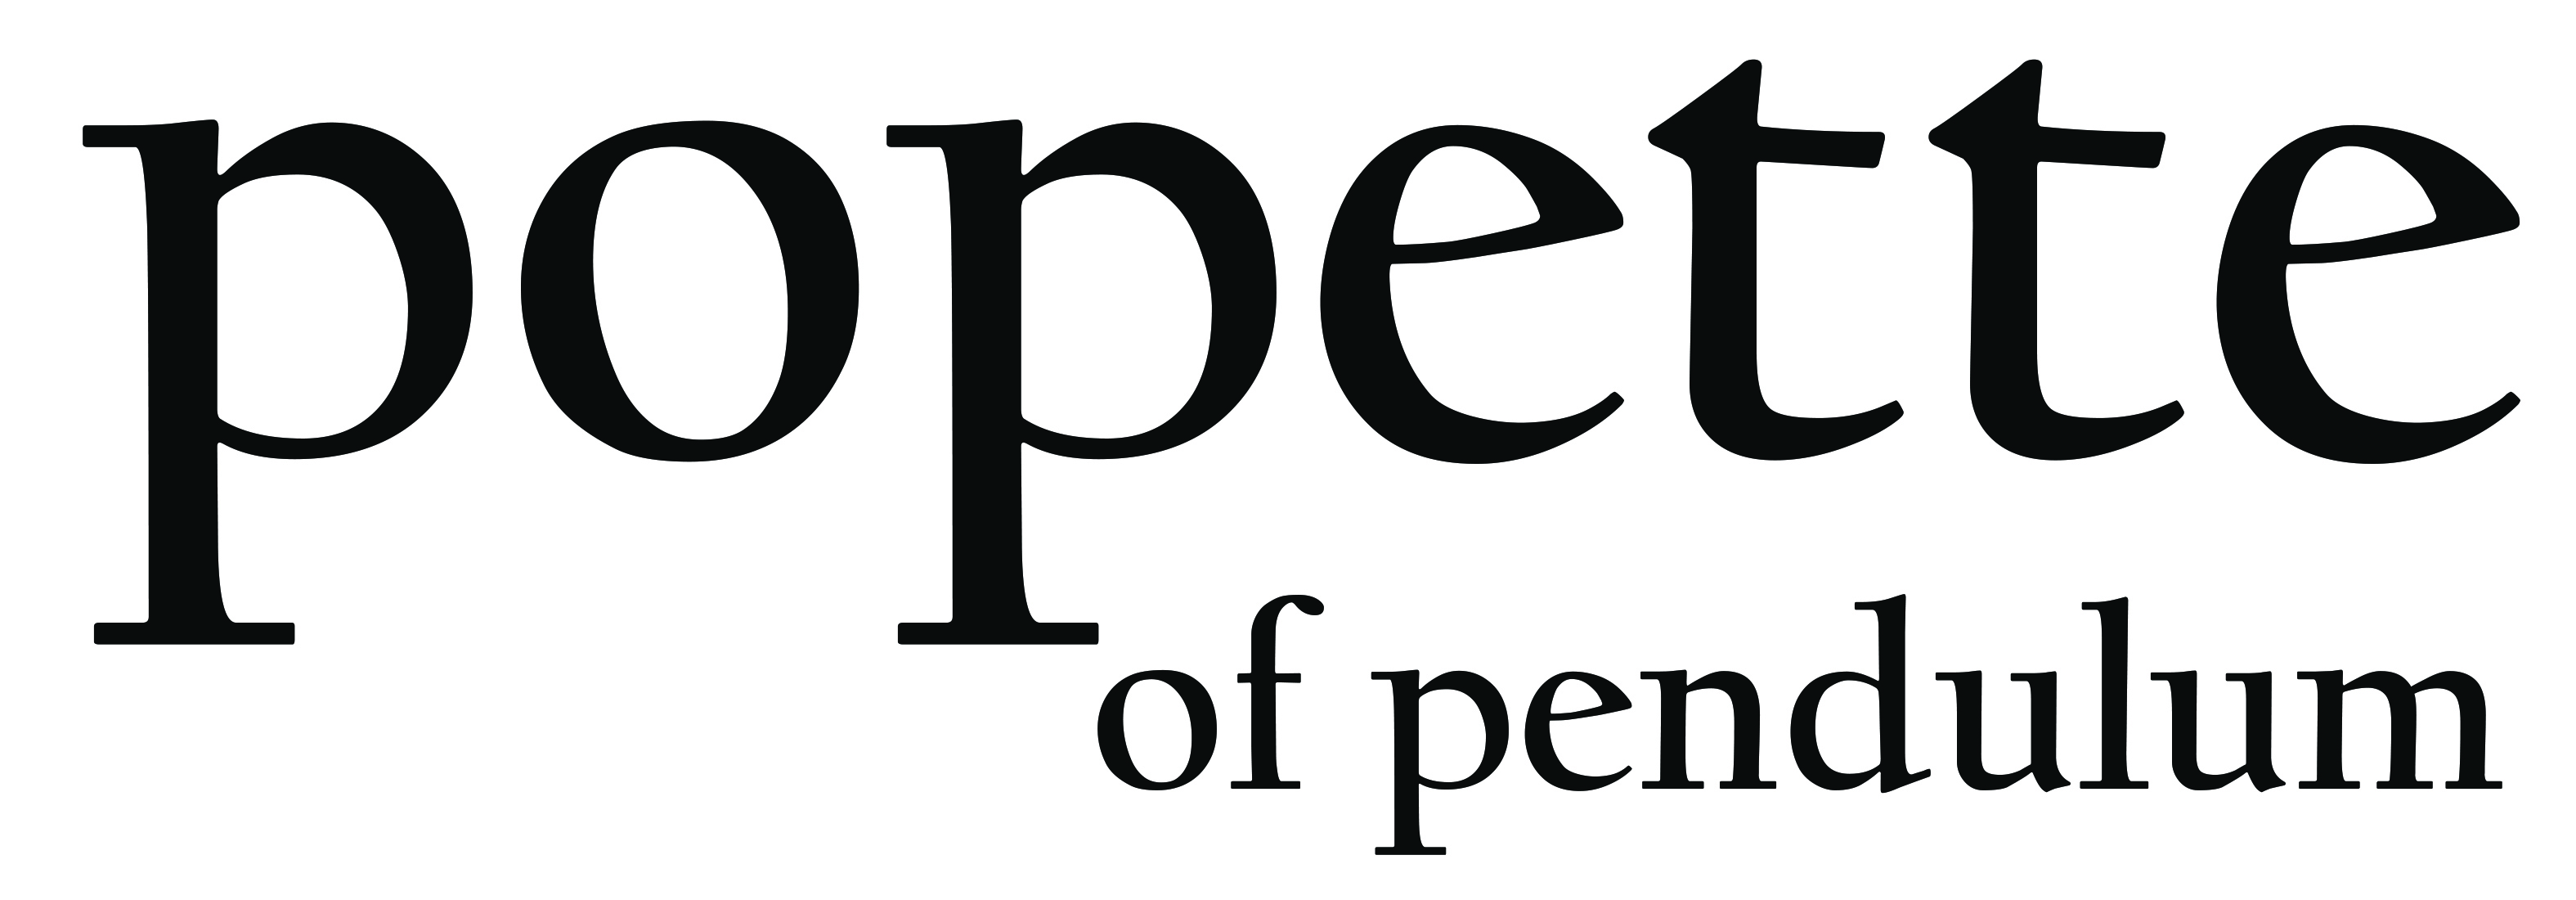 popette-of-pendulum-logo-2016.jpg